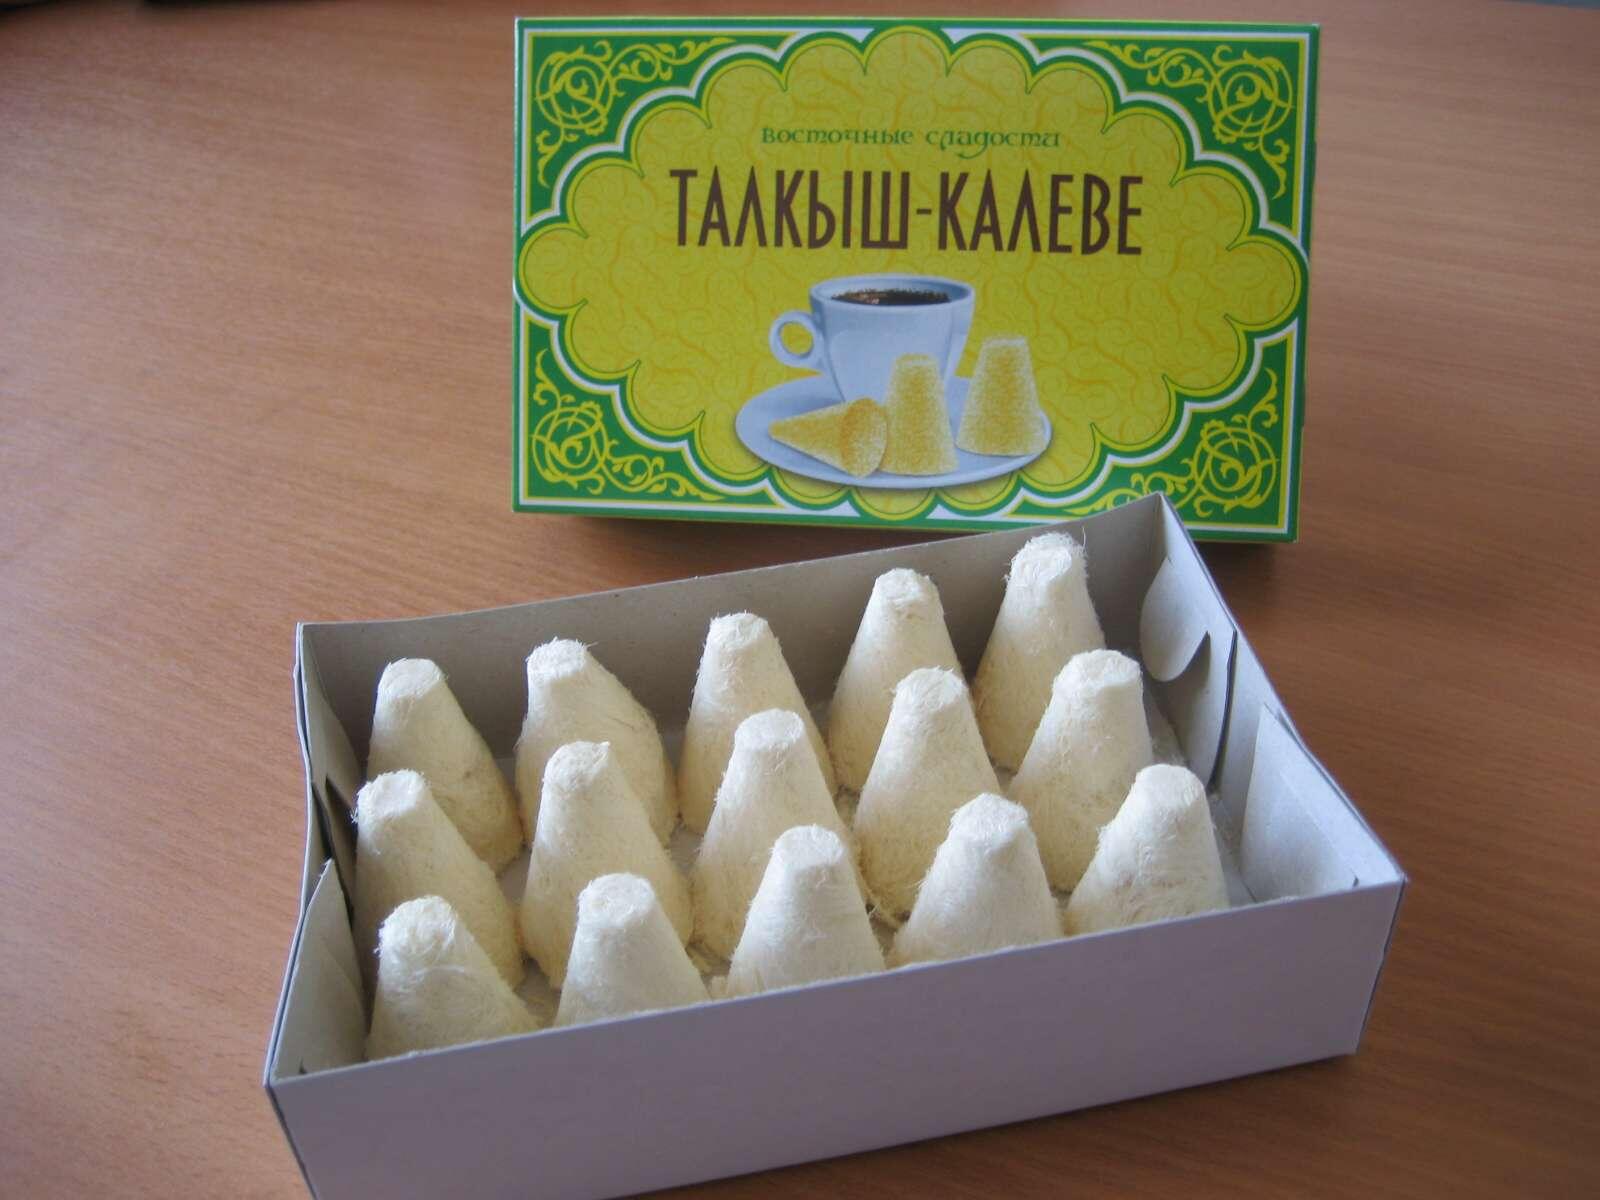 tatarskie-sladosti талкыш-калеве